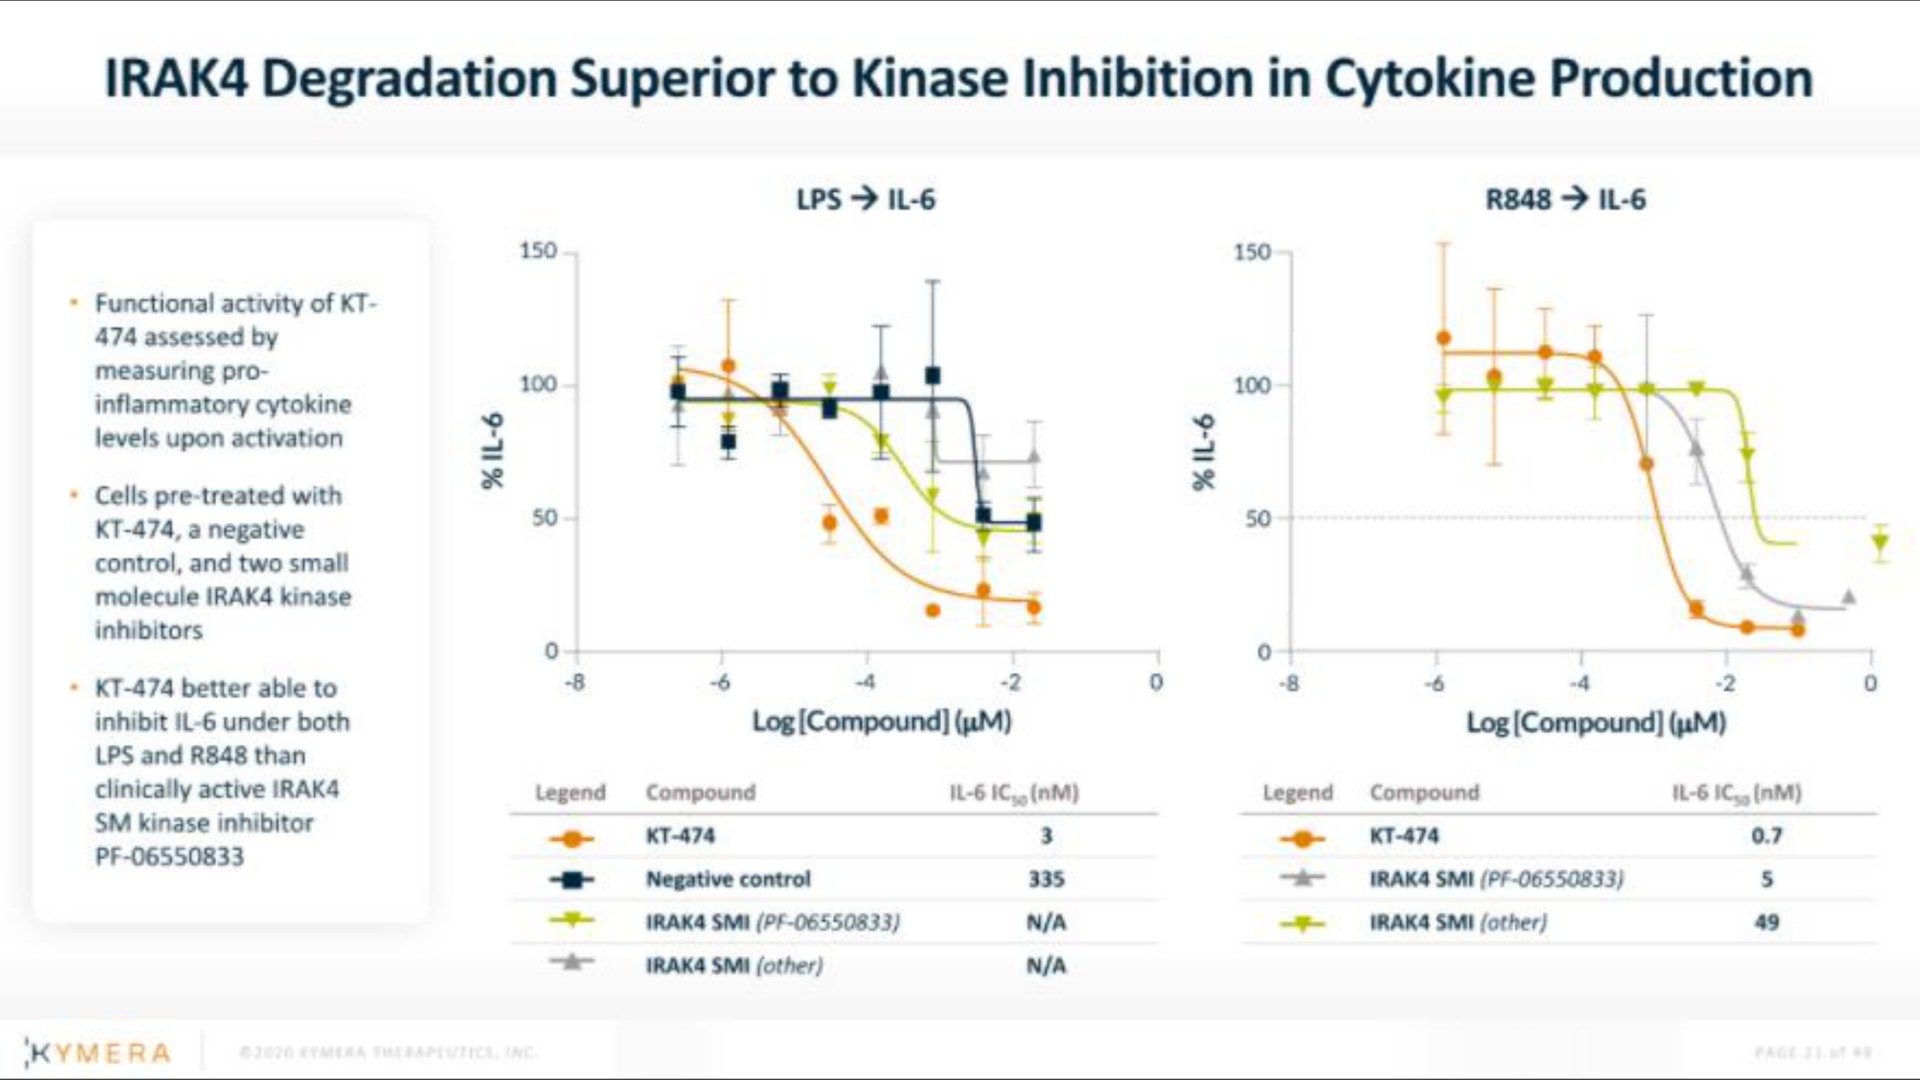 degradation superior to kinase inhibition in production | Kymera